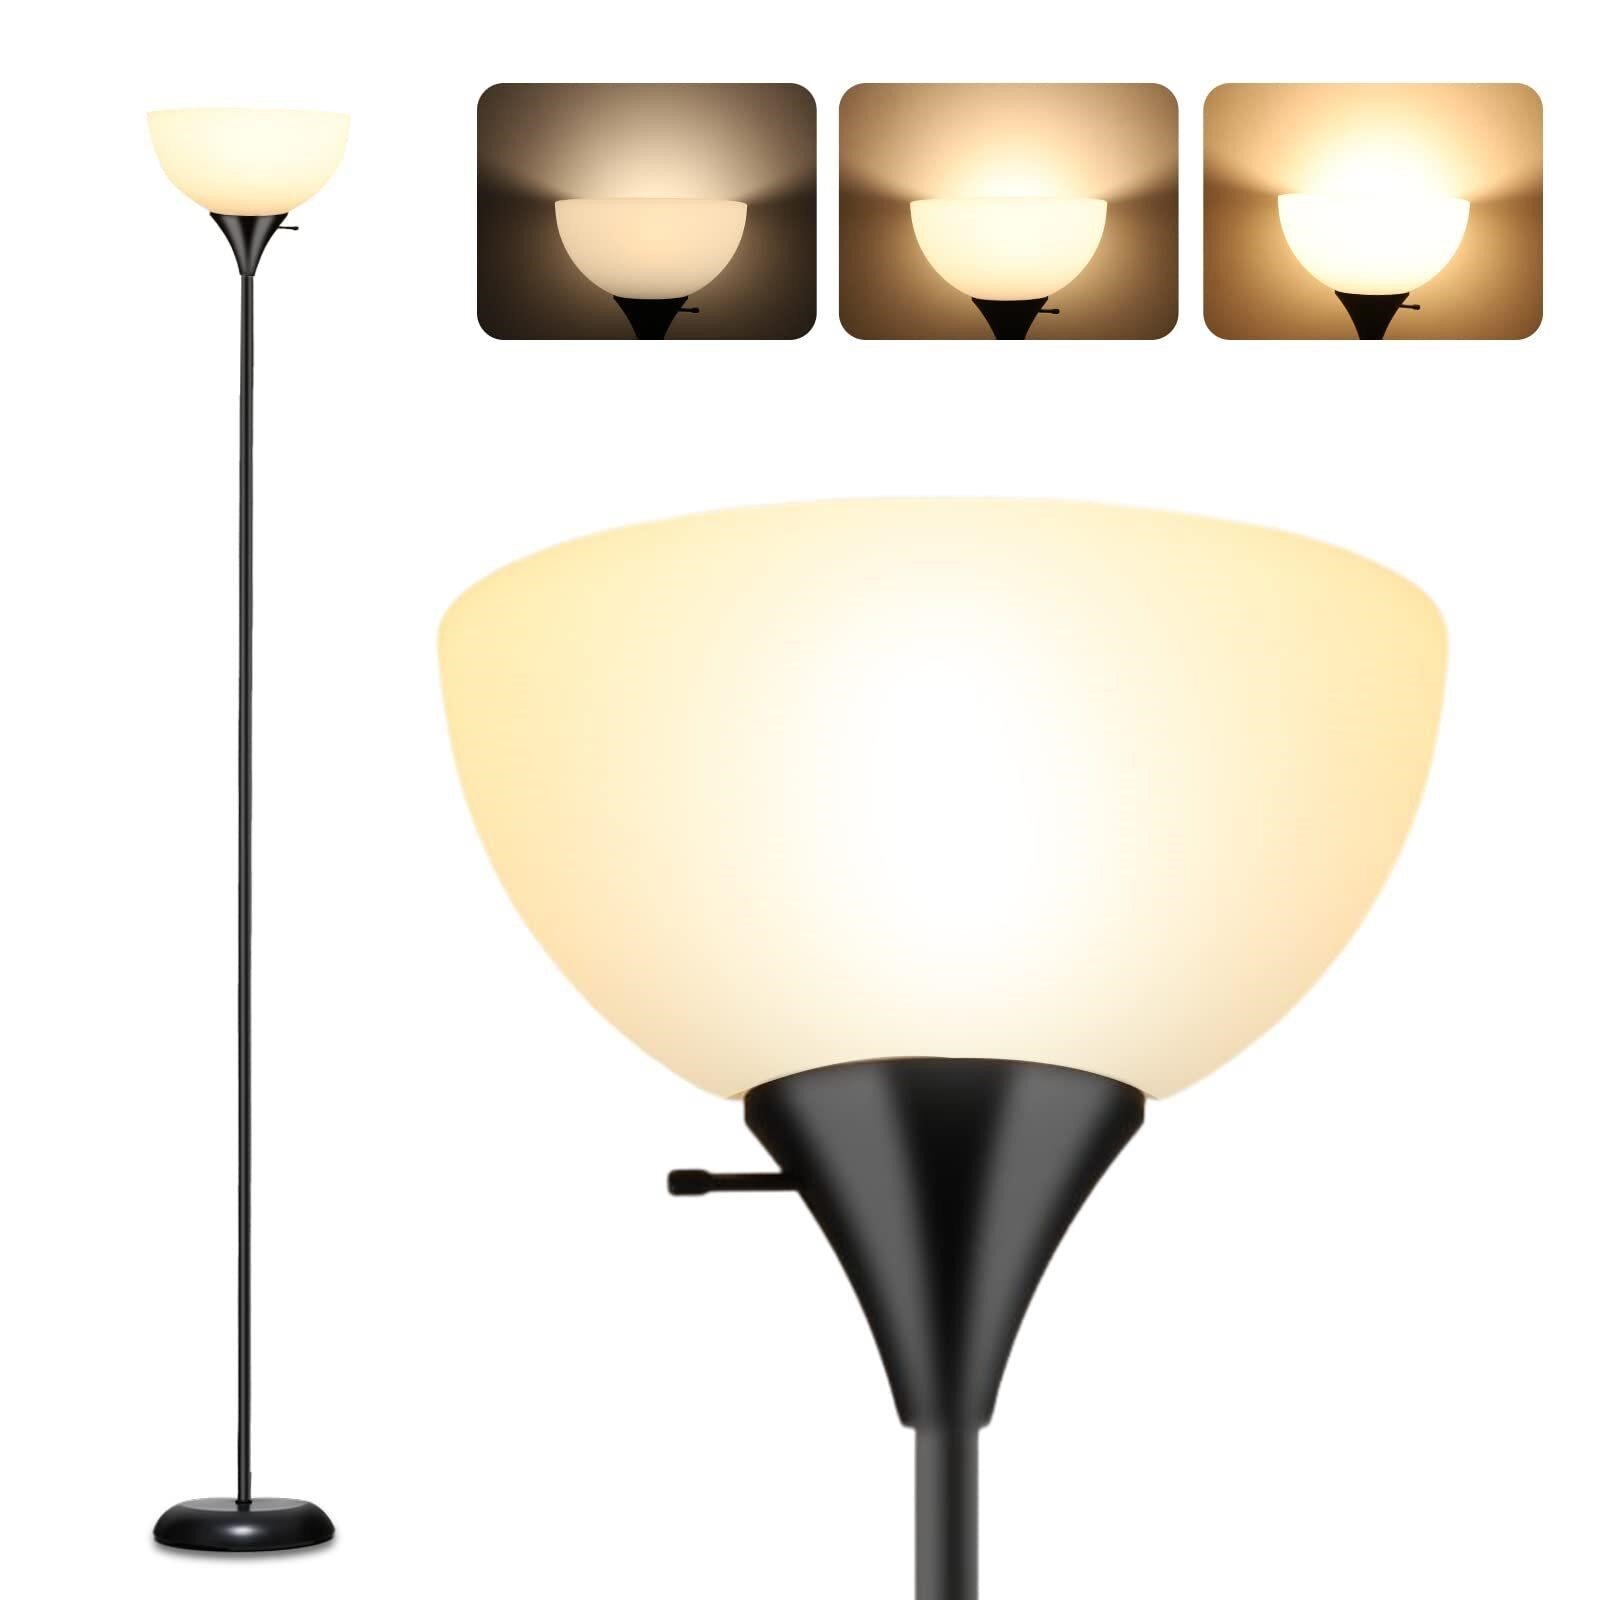 Standing Lamp, Led Floor Lamps for Living Room,